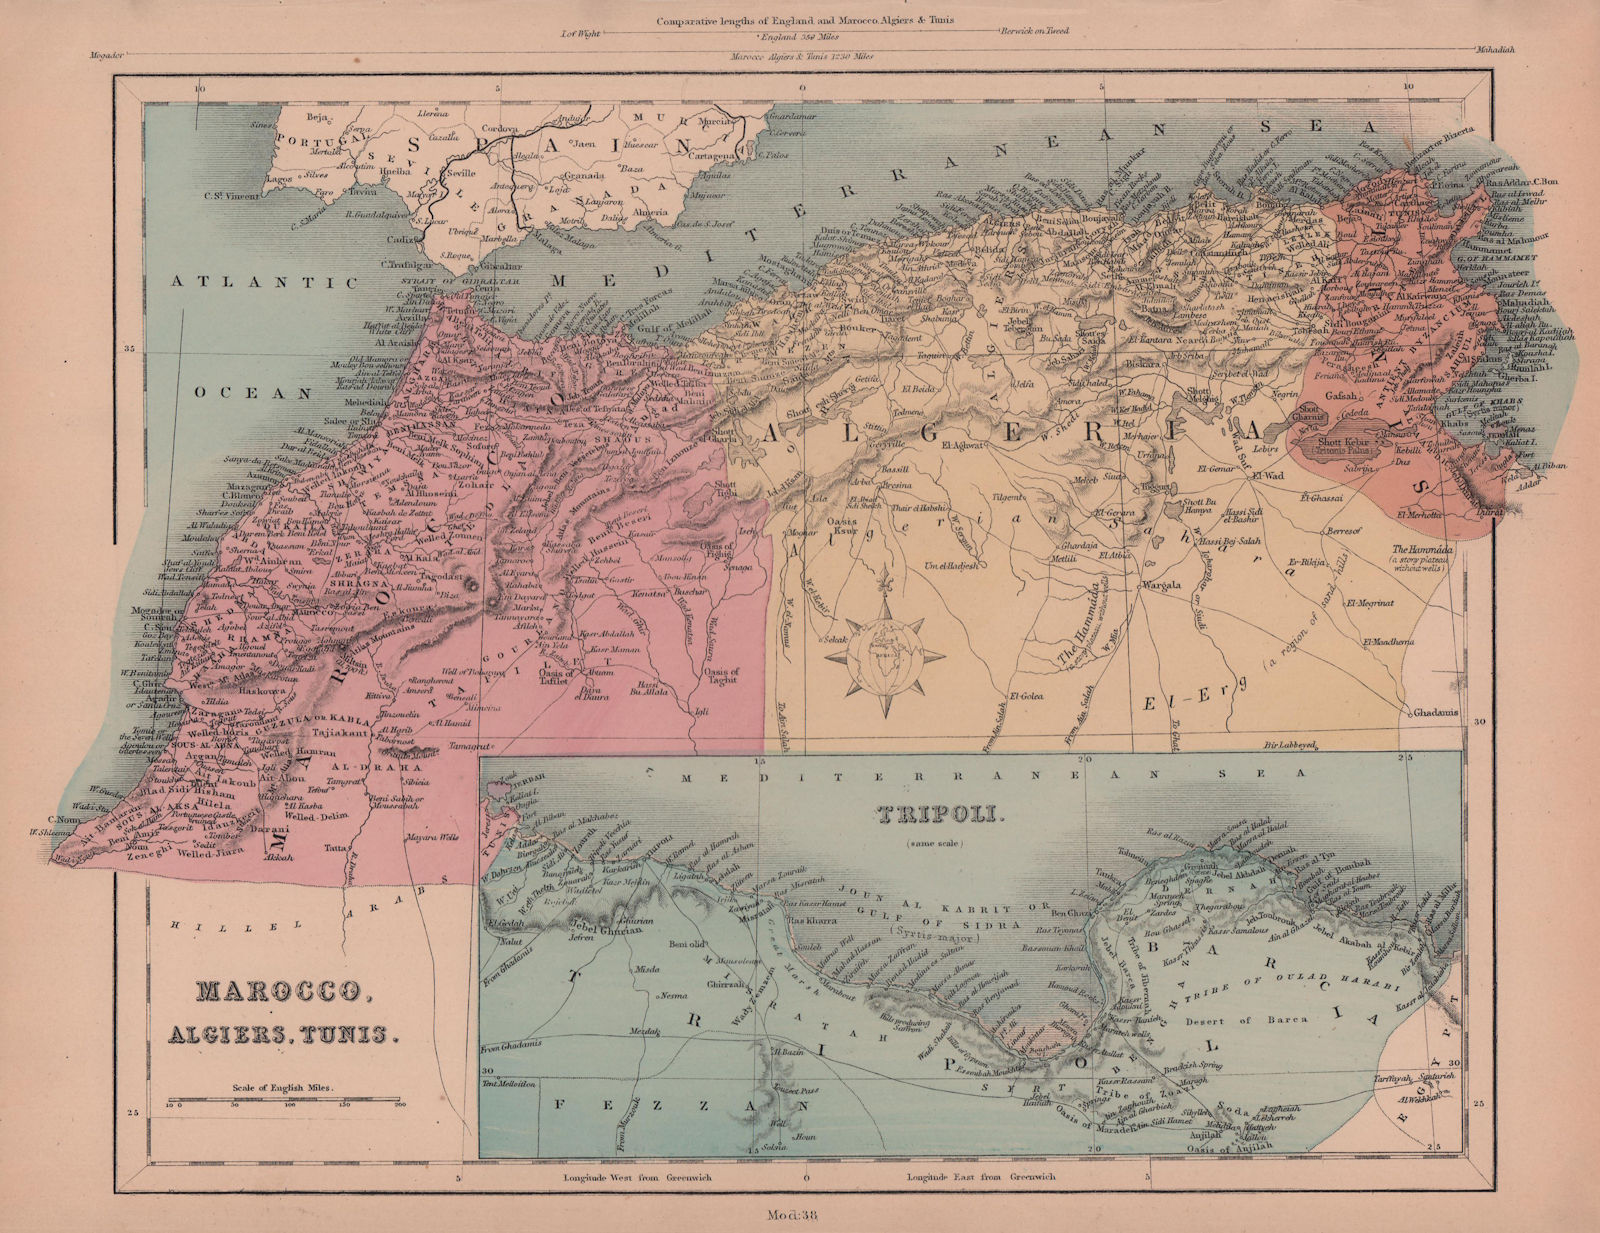 Associate Product Morocco, Algeria, Tunisia & Libya. North Africa. HUGHES 1876 old antique map